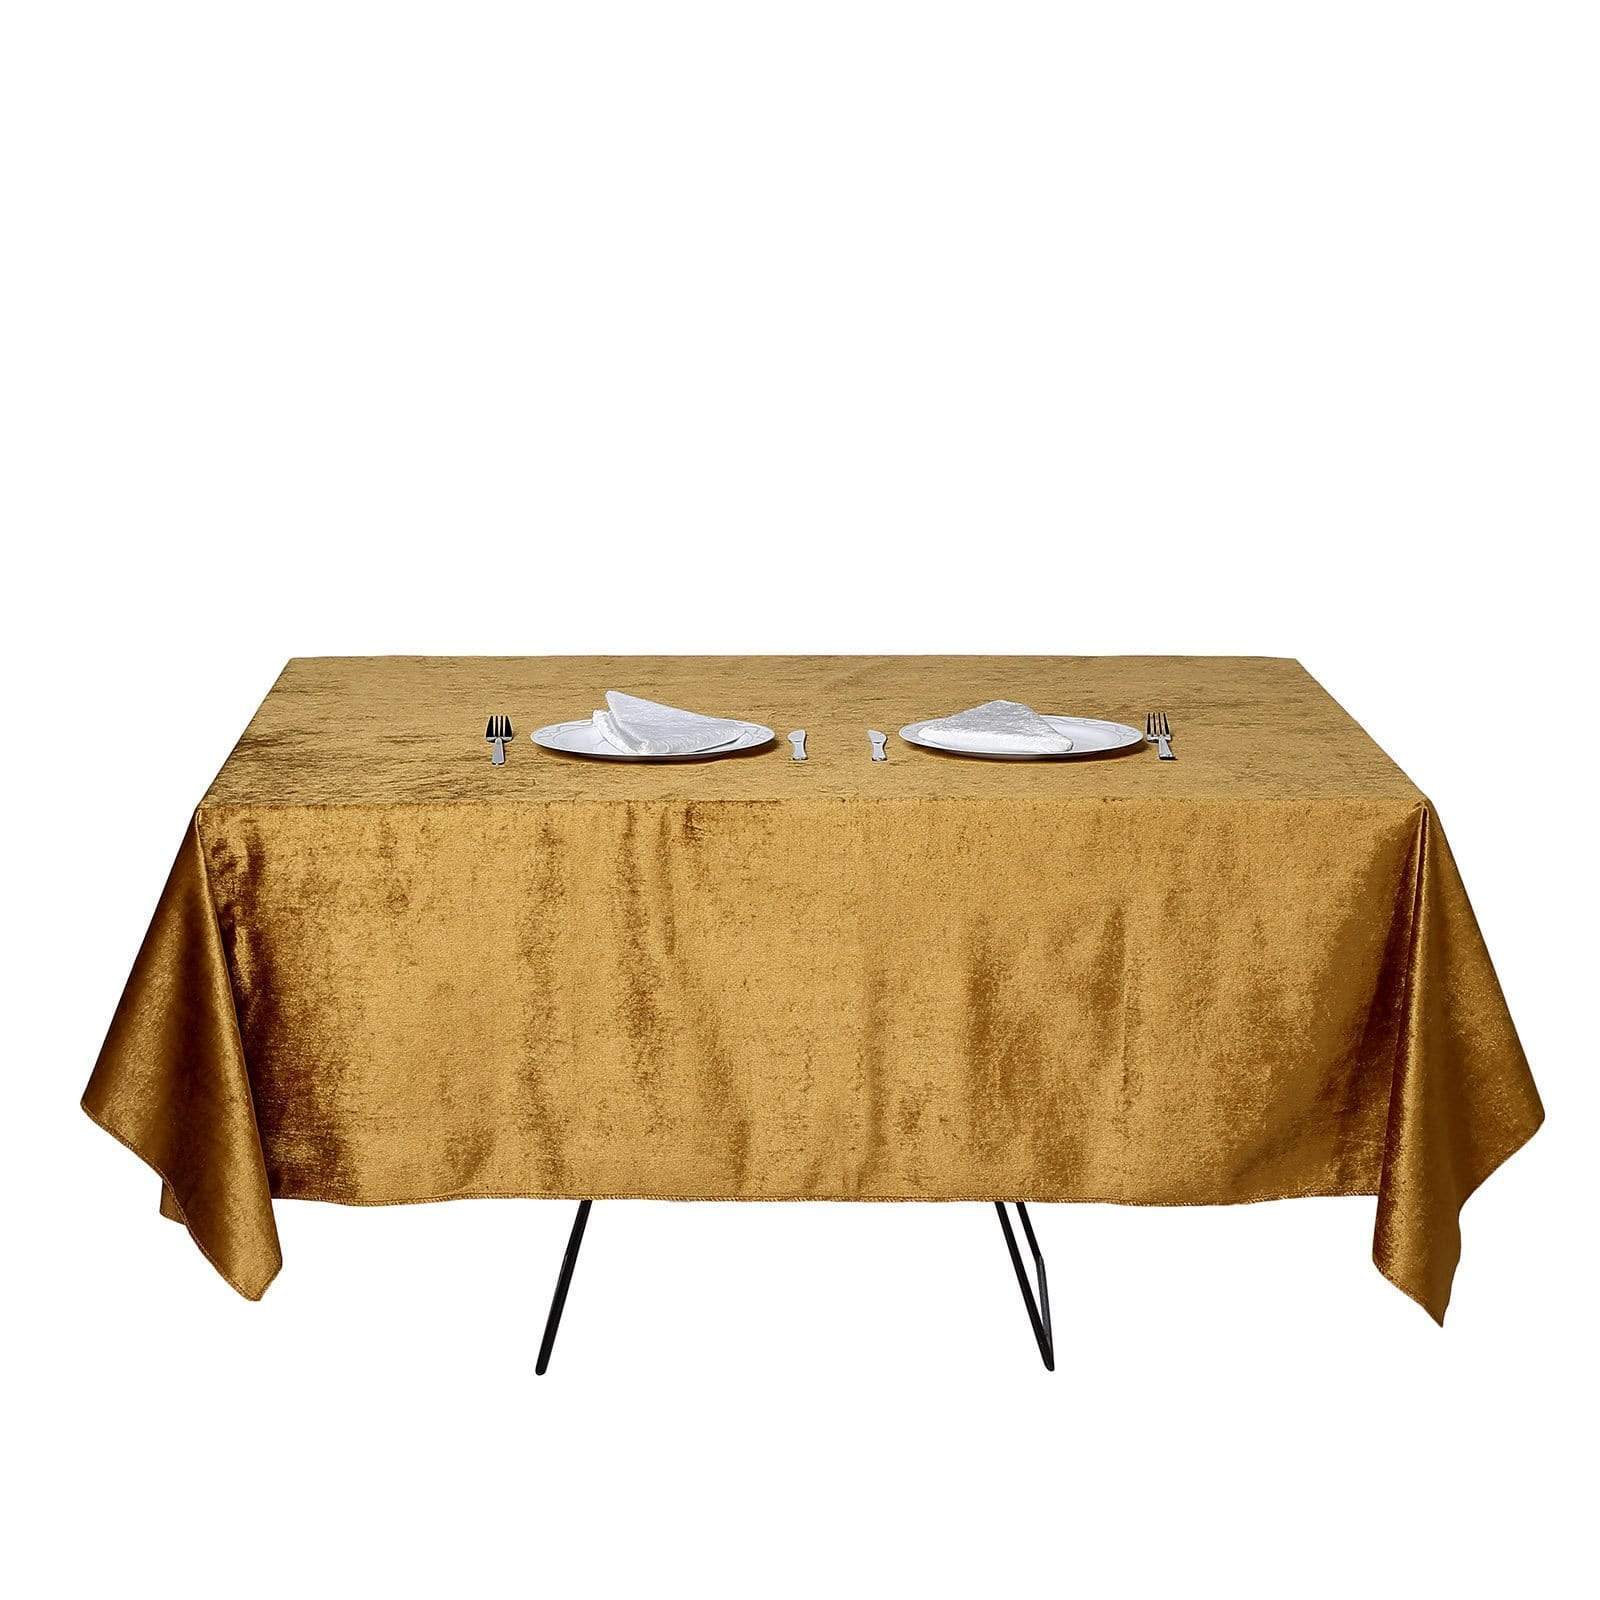 72x72 in Gold Square Premium Velvet Table Overlay